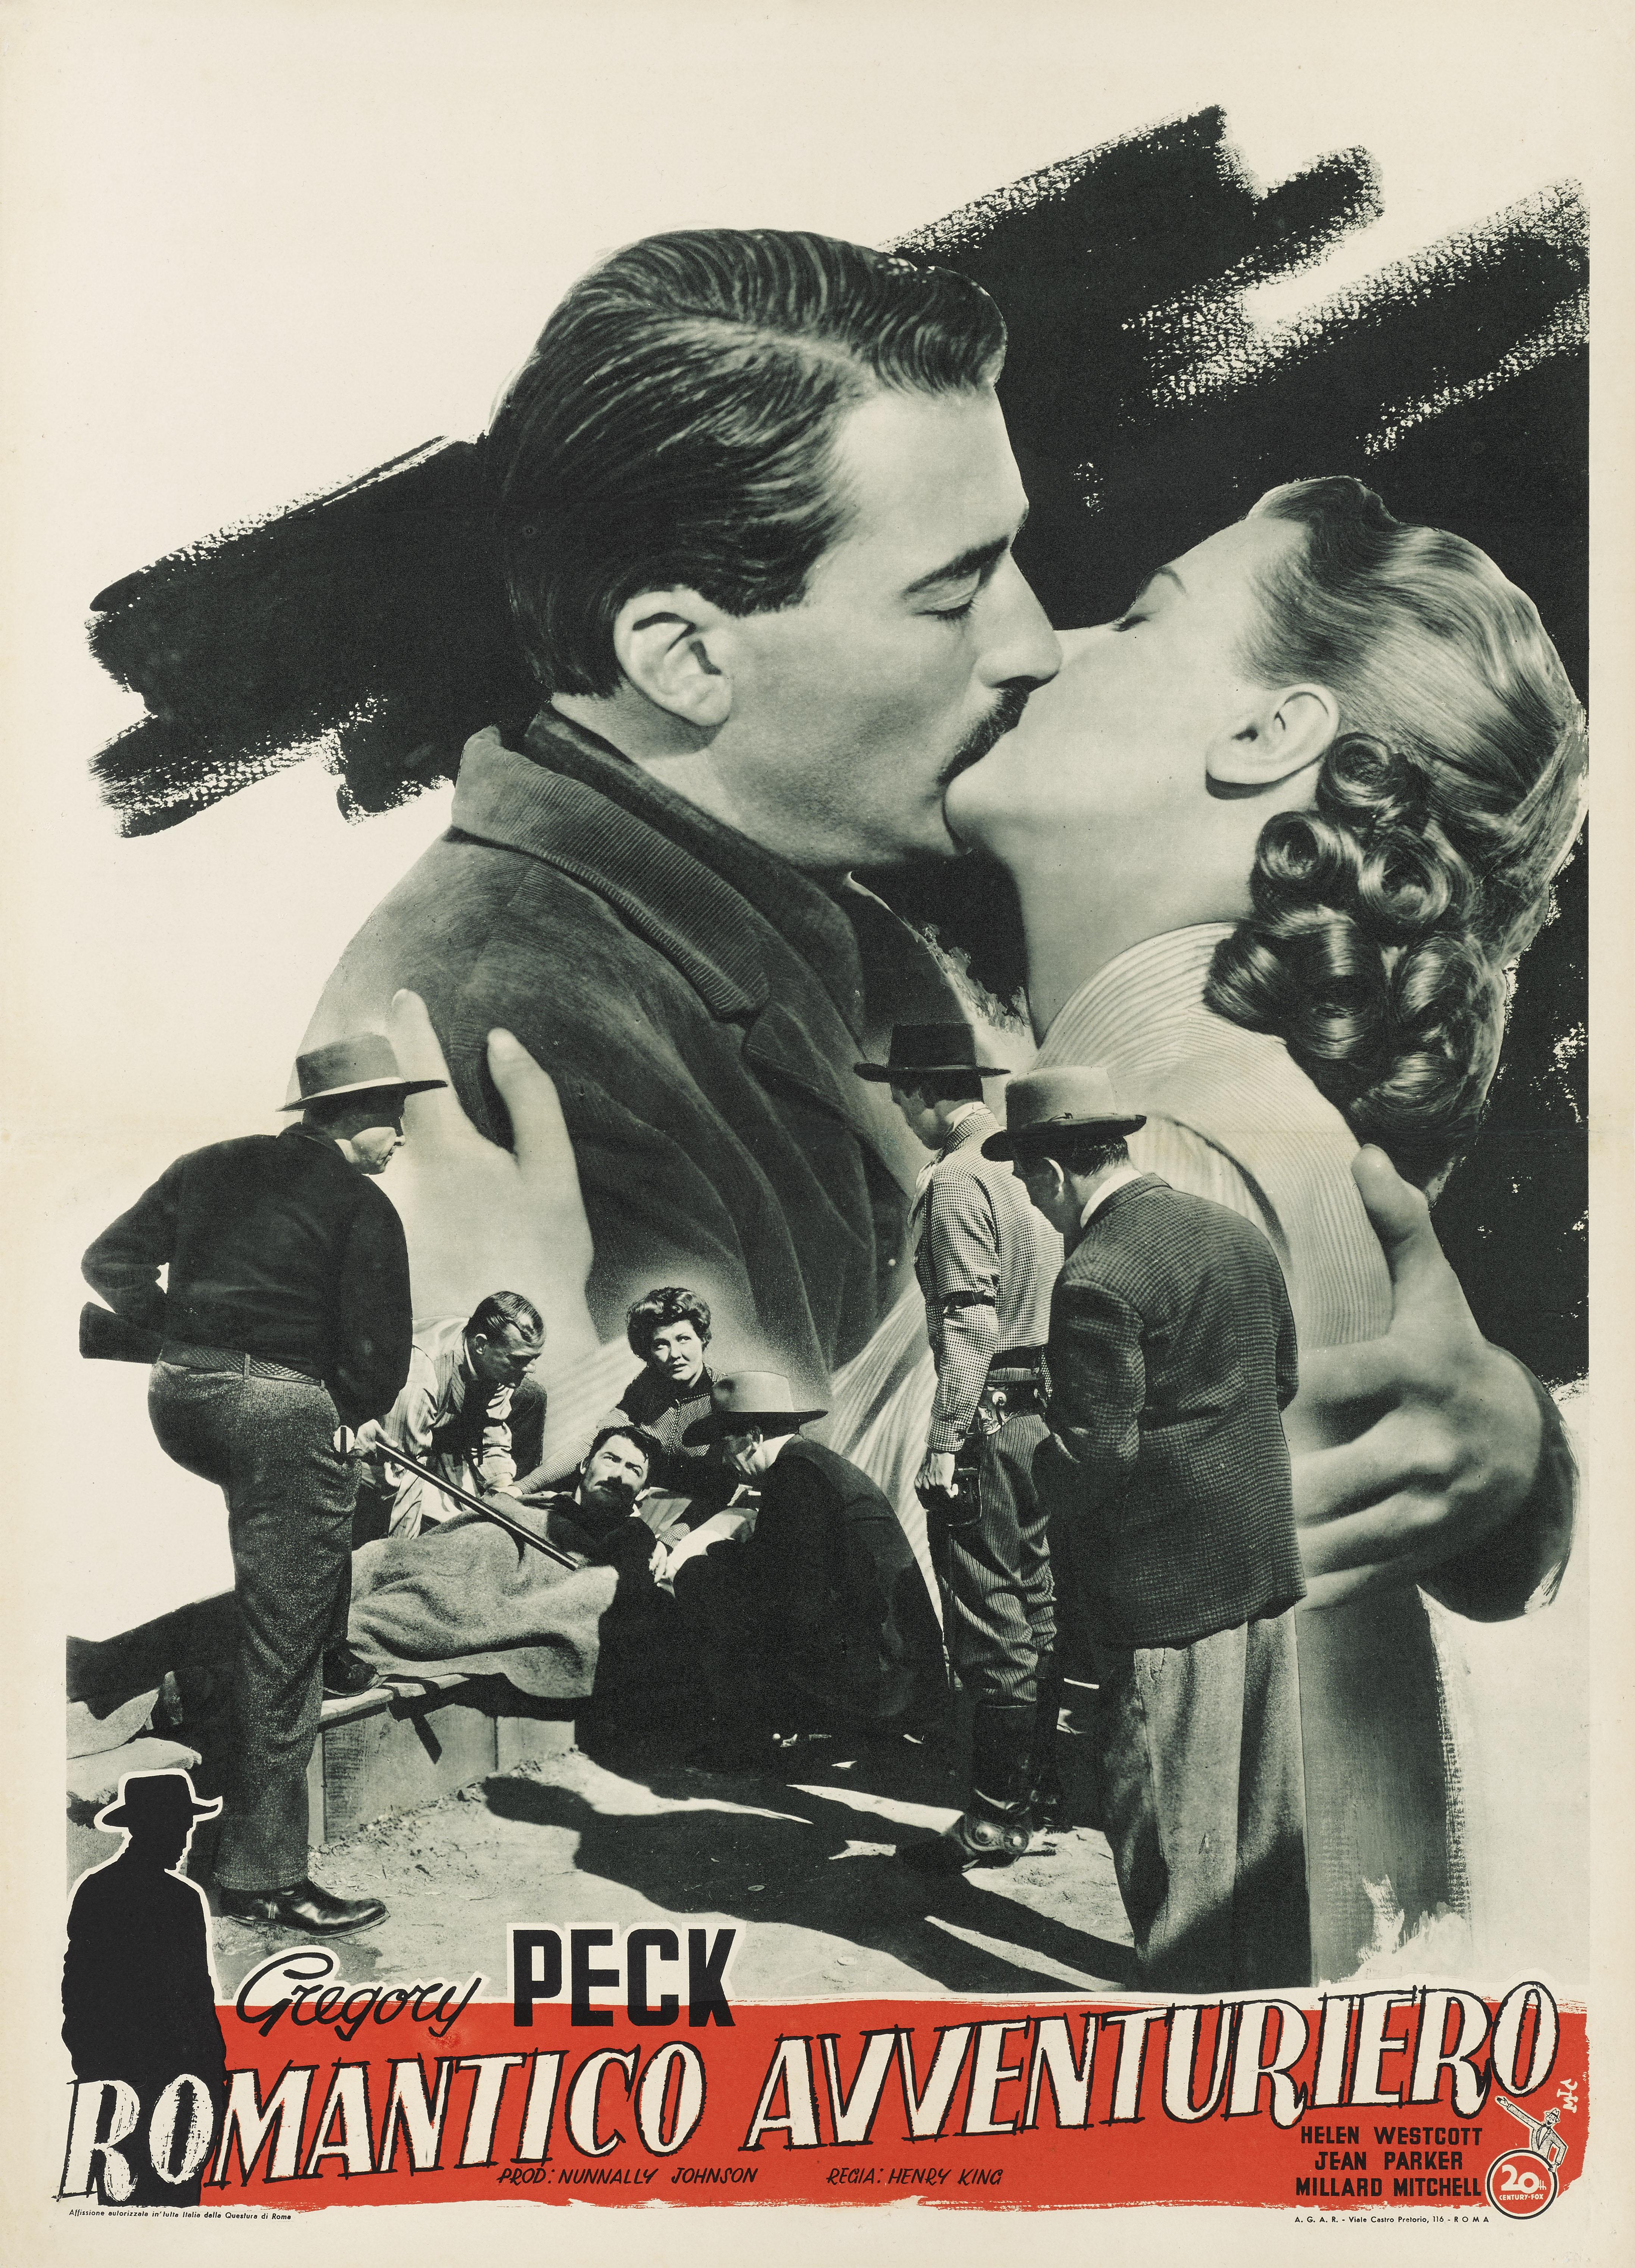 Original Italian film poster for 